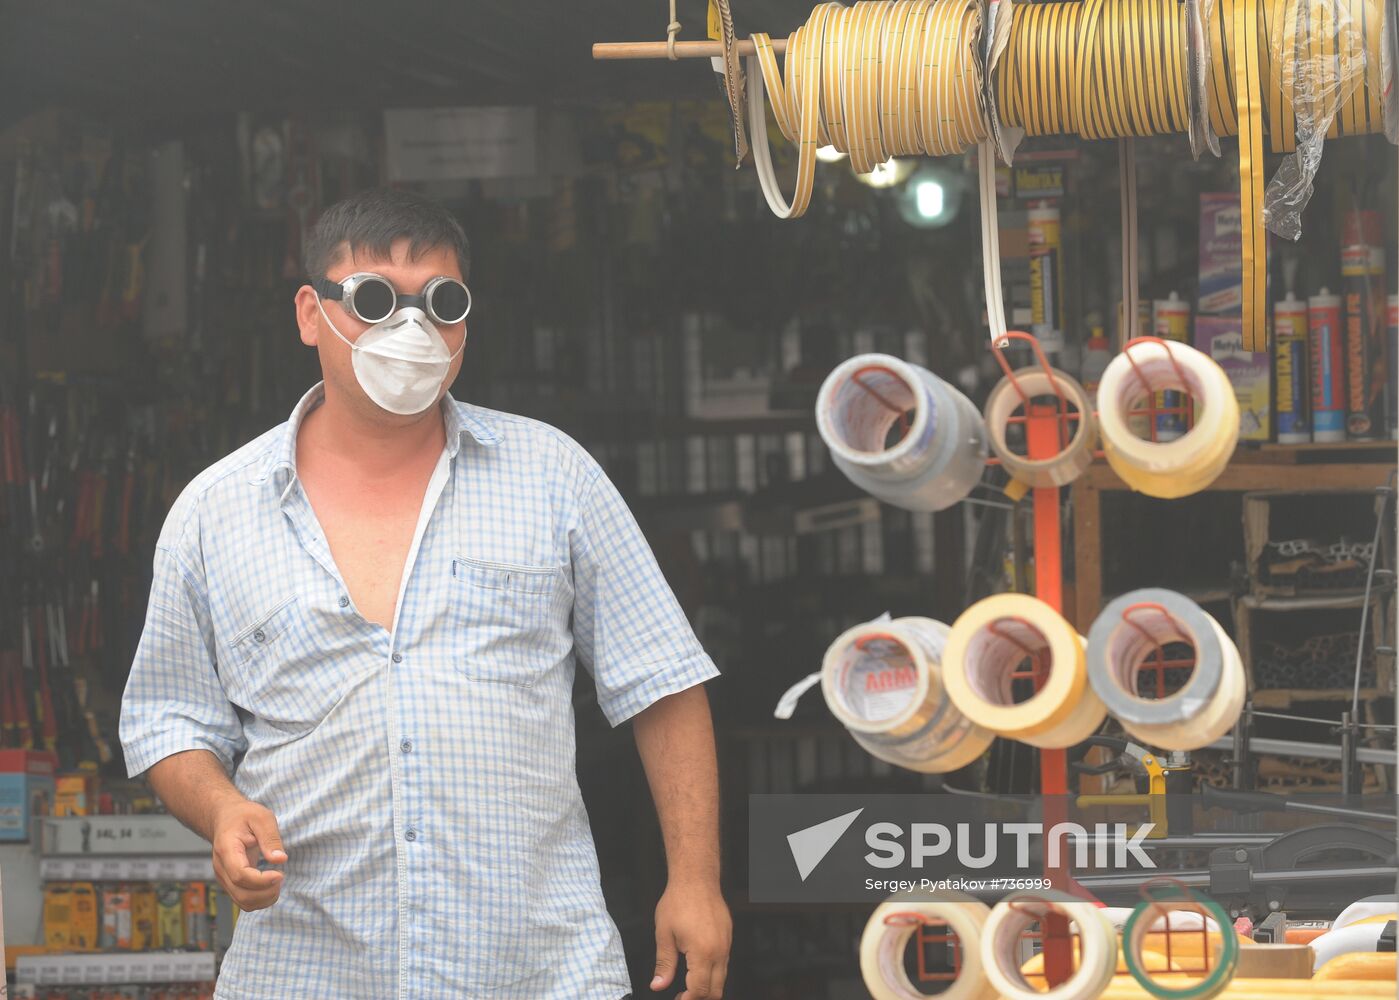 Marketplace vendor wearing a mask